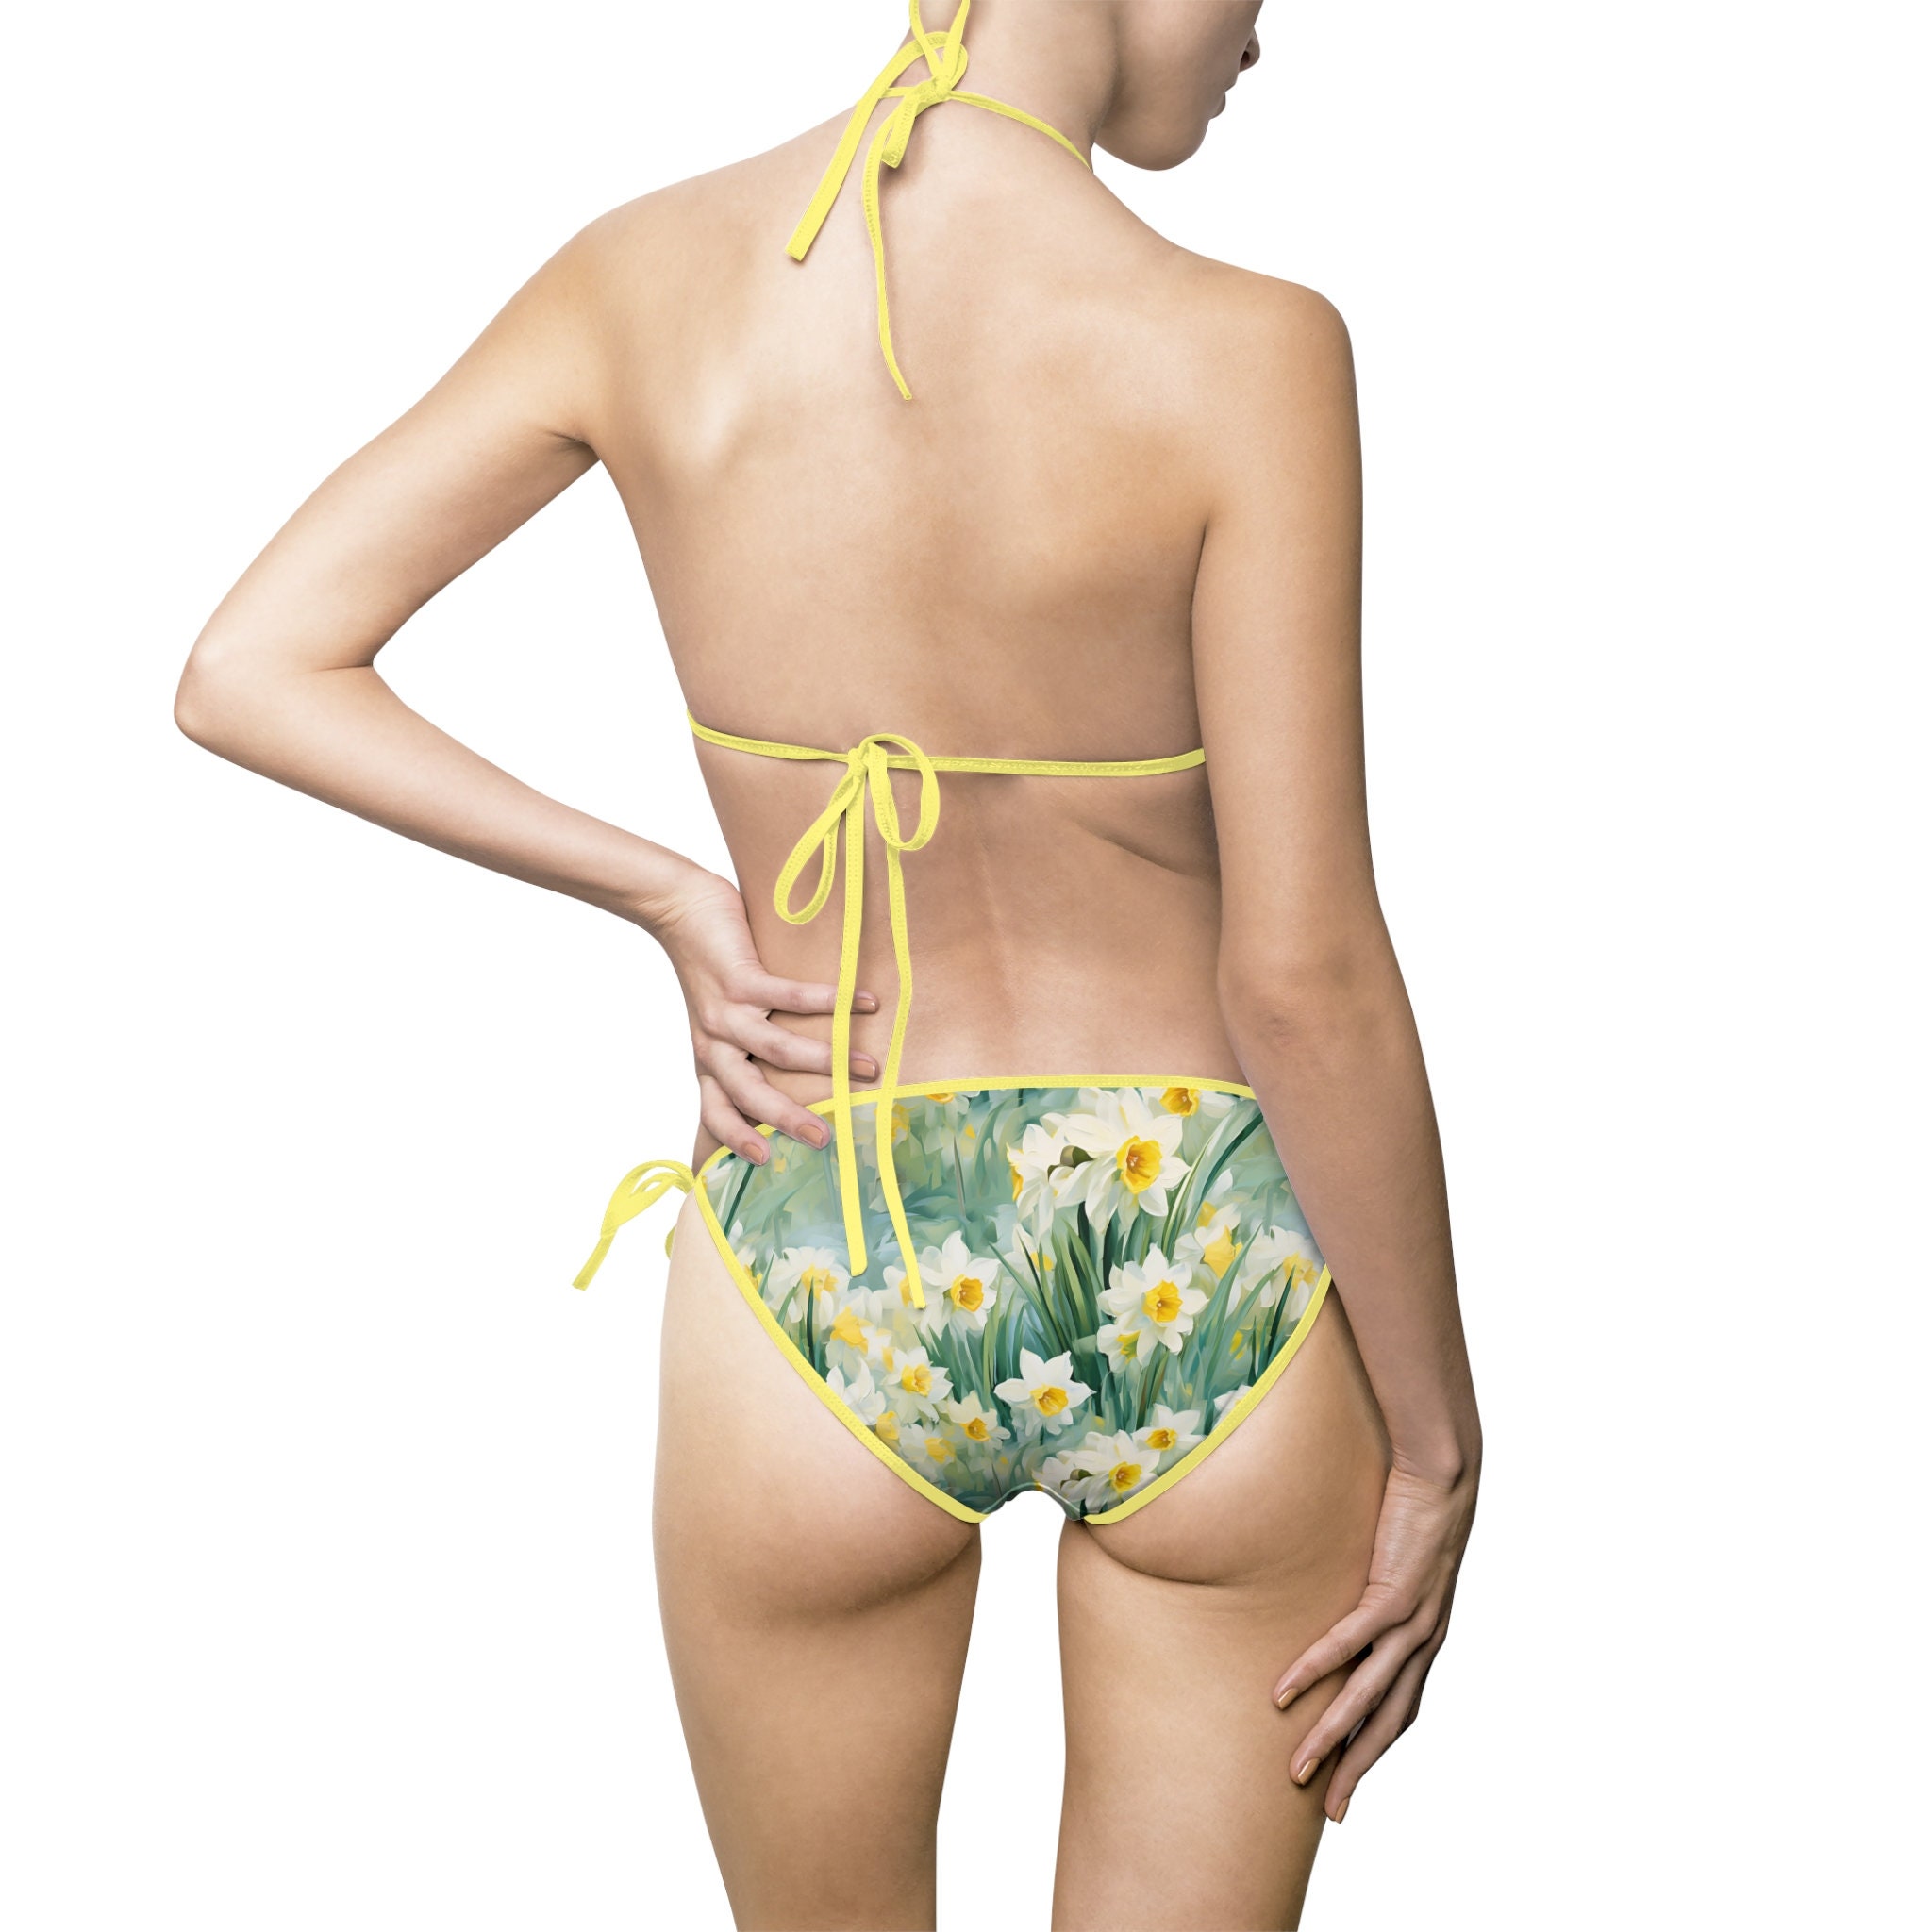 Daffodils High-waisted Bikini, Full Coverage Bikinis, Two-piece Swimsuits,  Plus Size Bikini, Recycled Material, Eco-fabric, Floral Swimsuits 